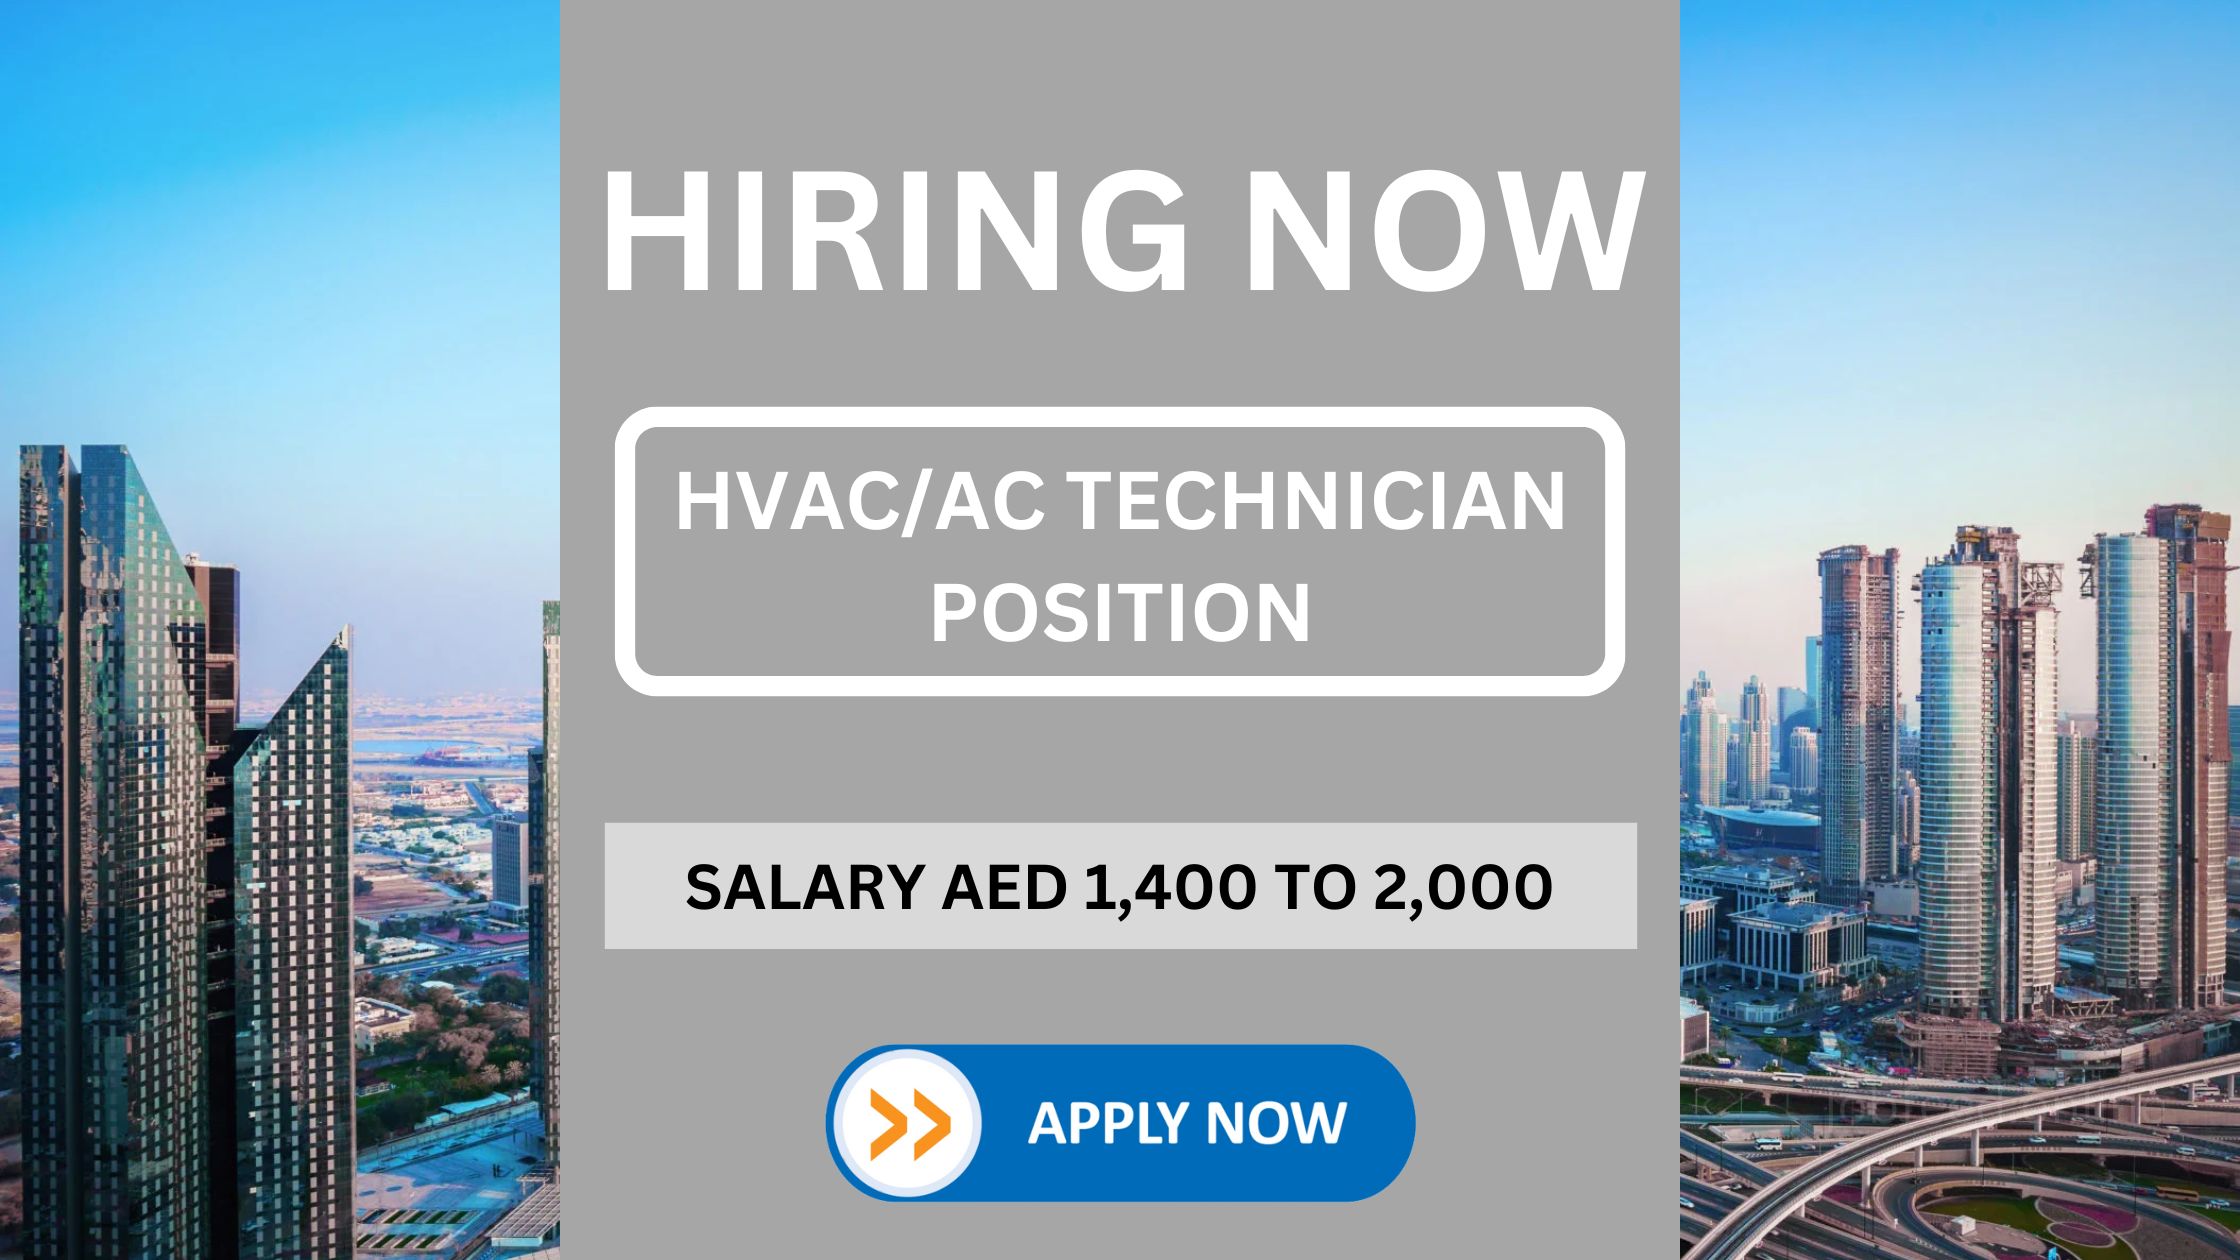 HVAC/AC Technician Position in Abu Dhabi, UAE: 10 Vacancies Available